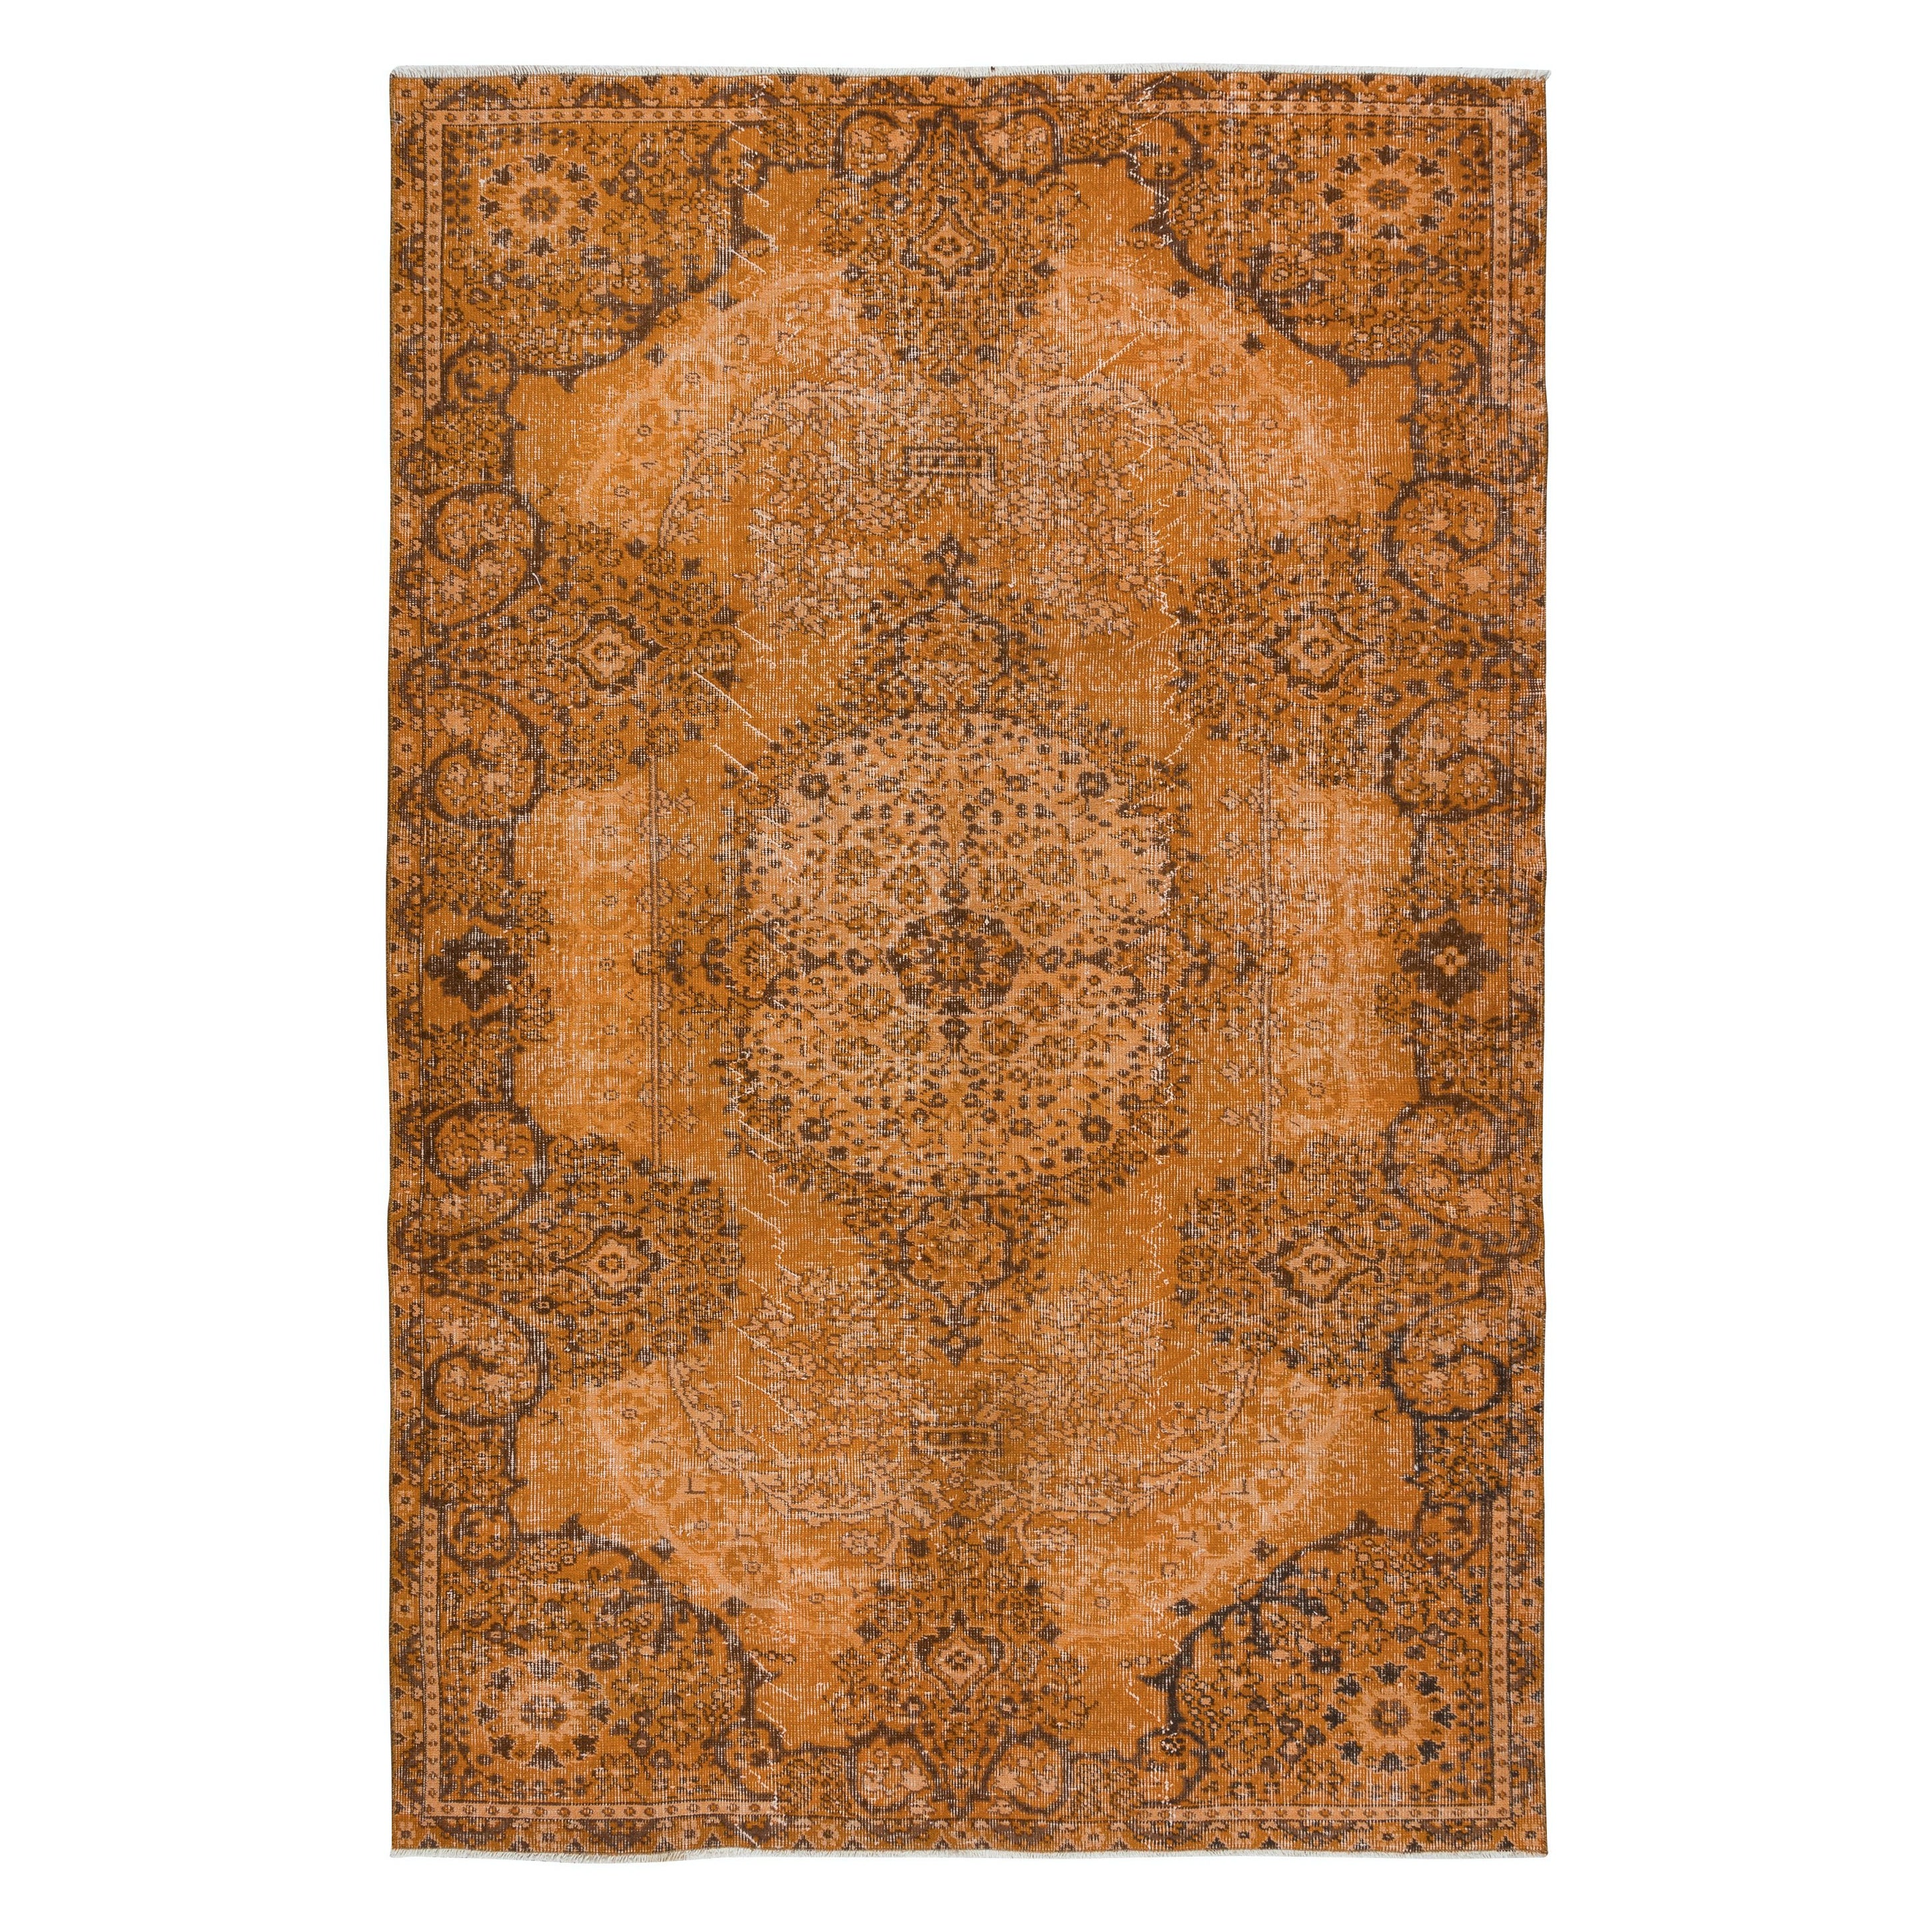 5.6x8.4 Ft Dreamy Orange Rug, Handknotted in Turkey, Modern Living Room Carpet